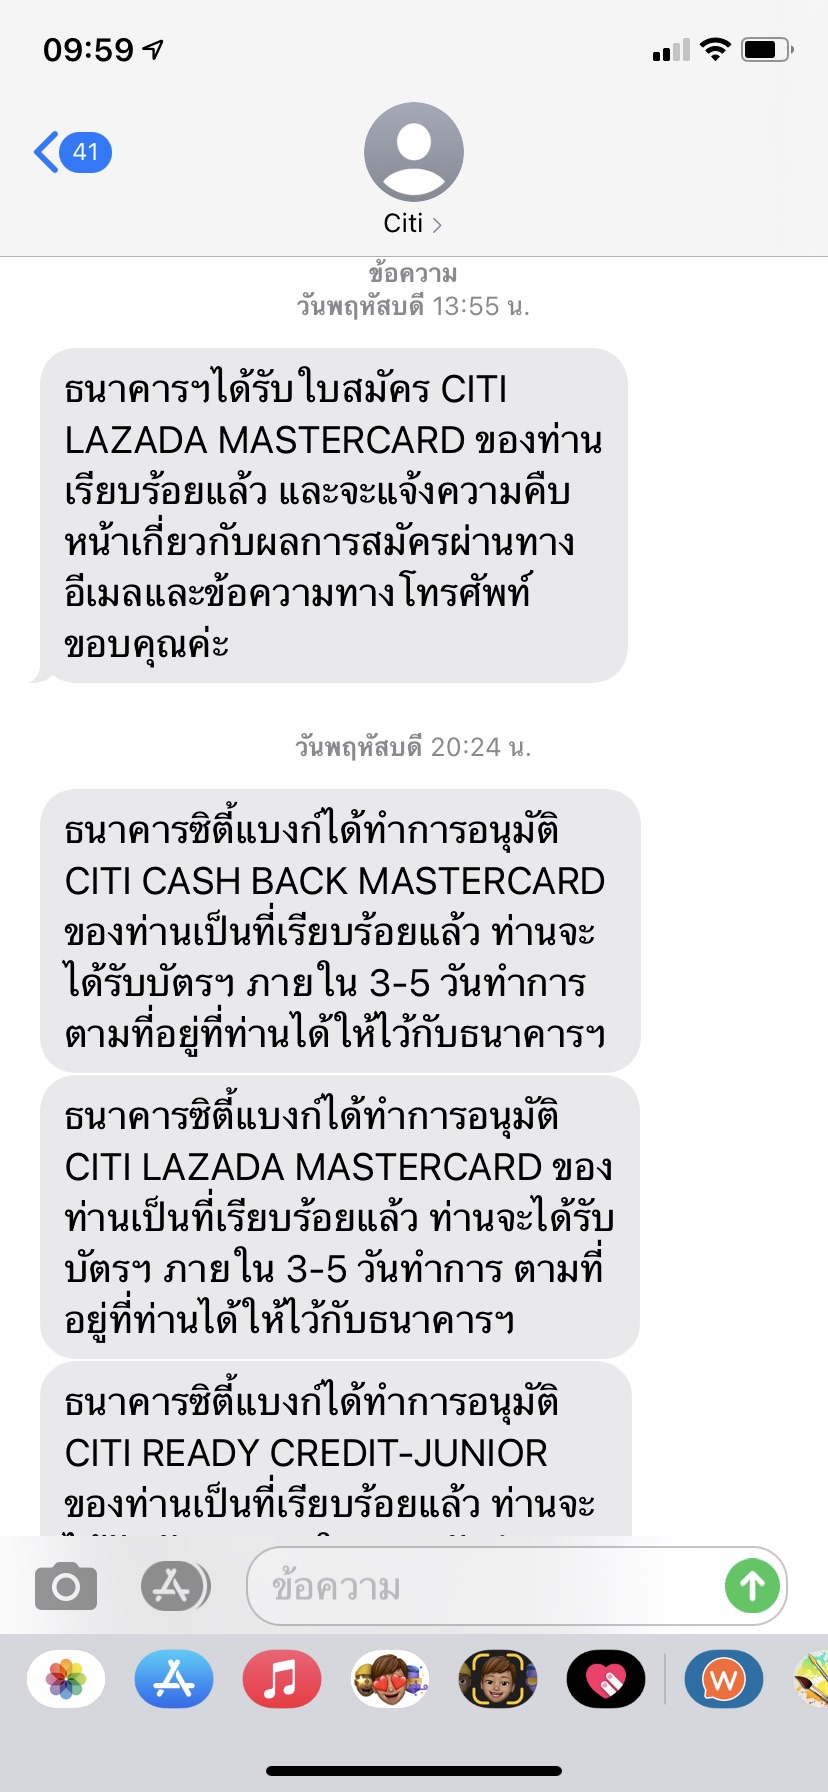 Citi Bank ยังอนุมัติสินเชื่อลูกค้าใหม่อยู่มั้ยคะหลังจากที่มีข่าวว่สจะปิดกิจการในไทย  - Pantip